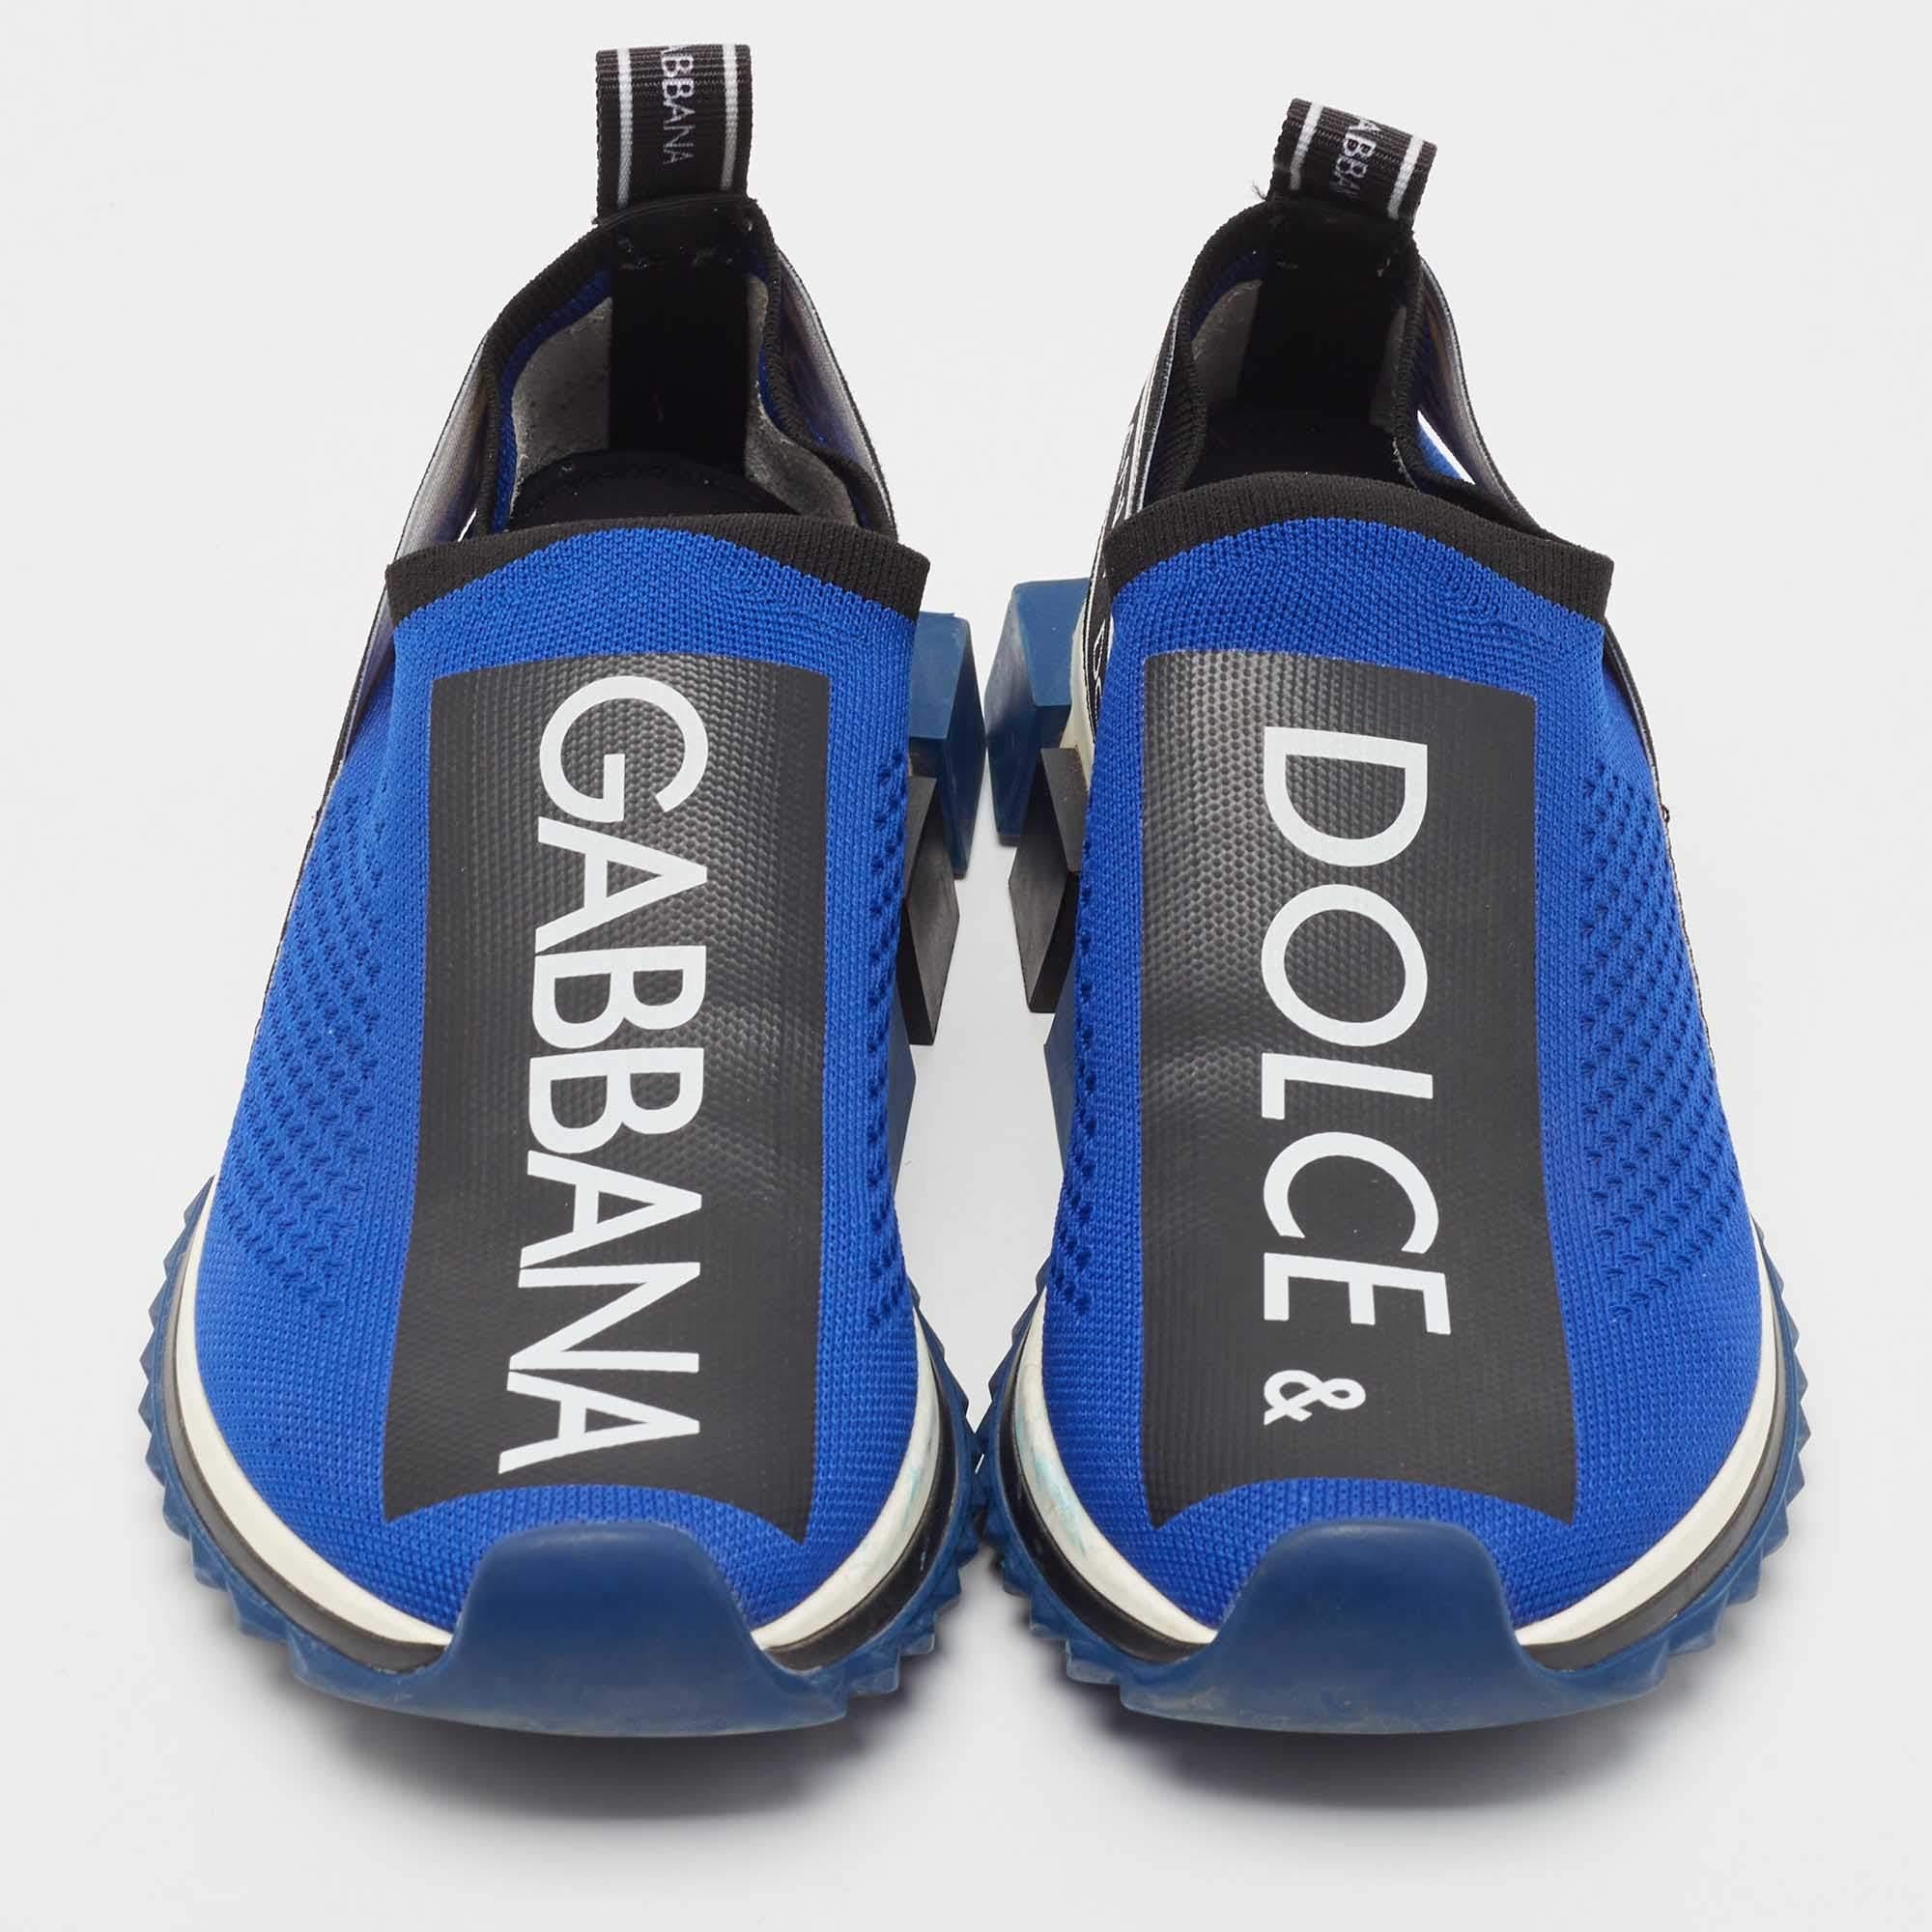 Dolce & Gabbana Blue/Black Knit Fabric Sorrento Sneakers Size 39 14